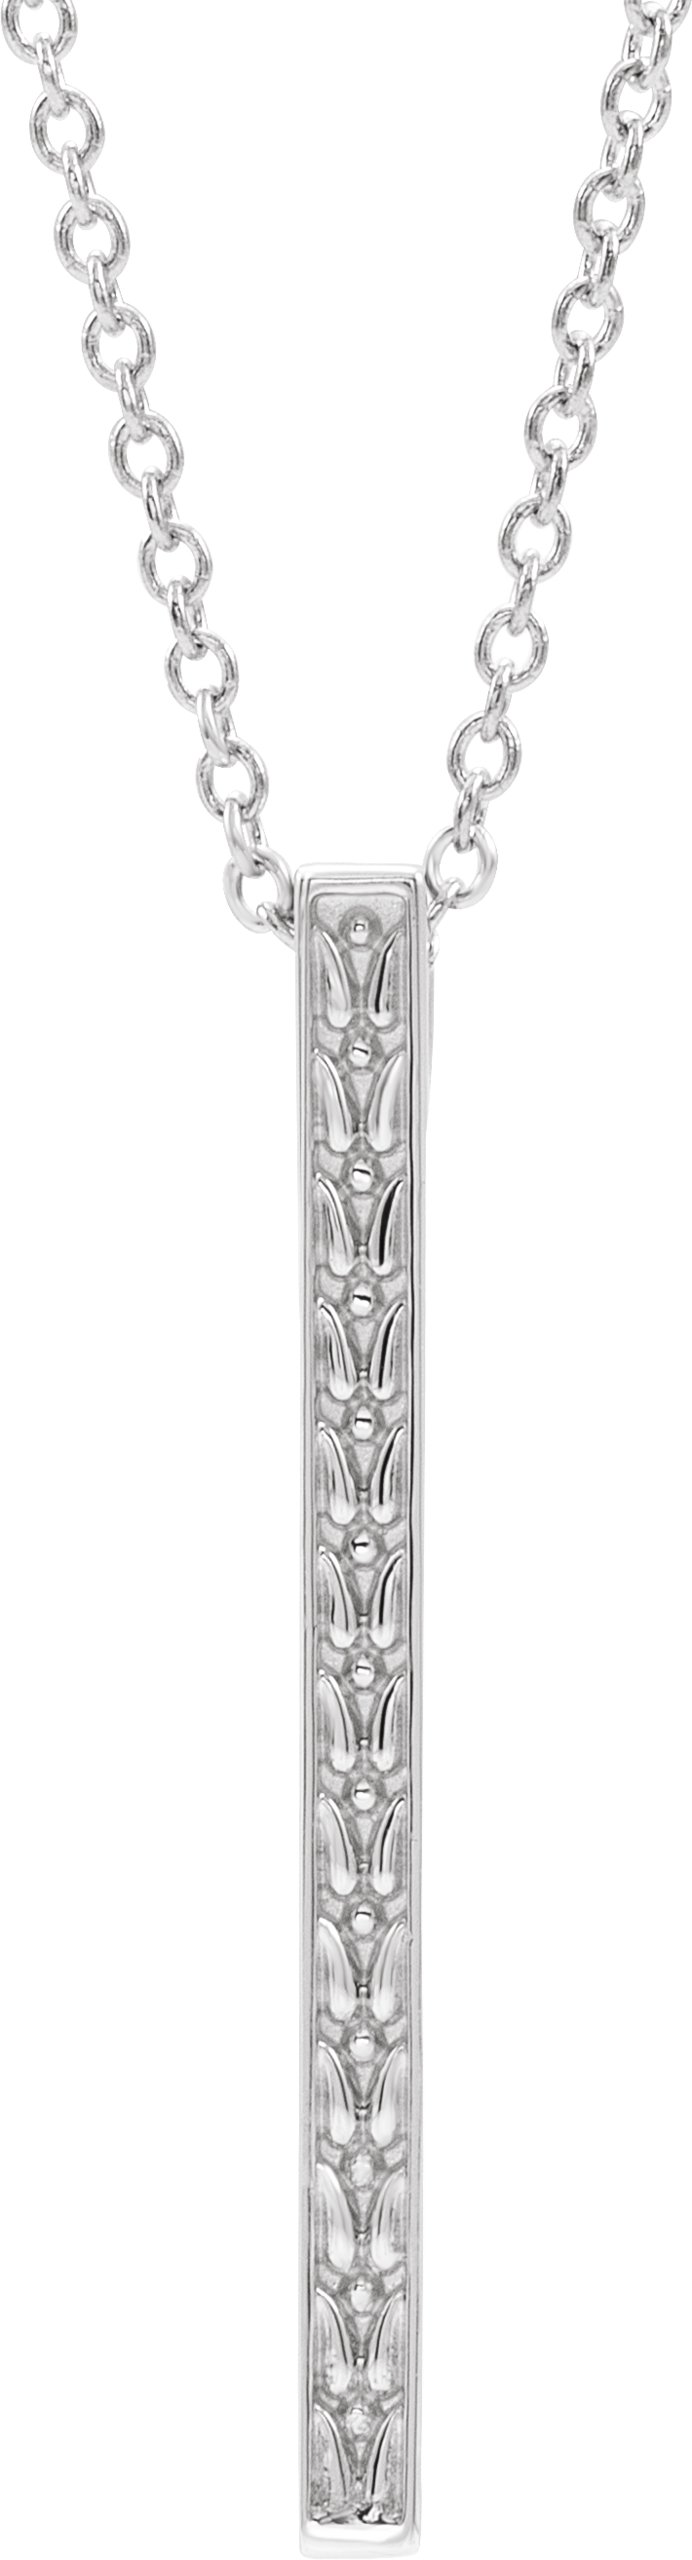 Sterling Silver Sculptural-Inspired Bar 16-18" Necklace